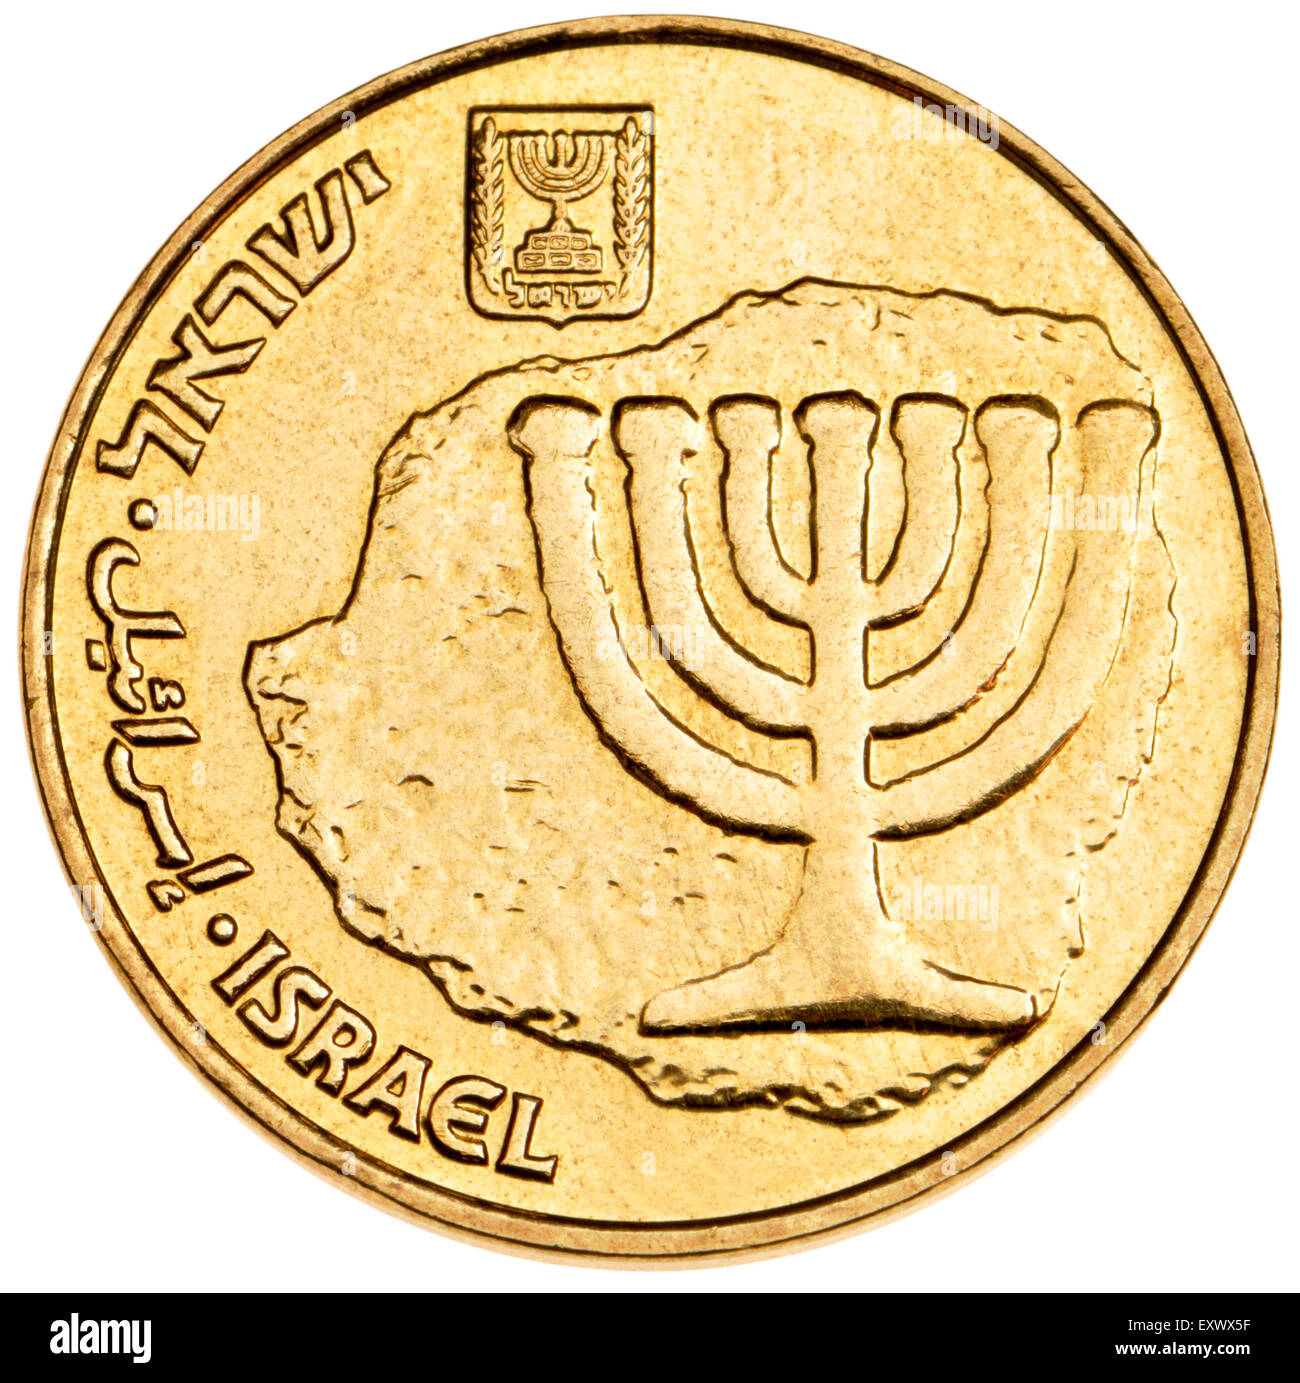 Israël 10 agorot coin montrant une Menora Chandelier juif / Banque D'Images